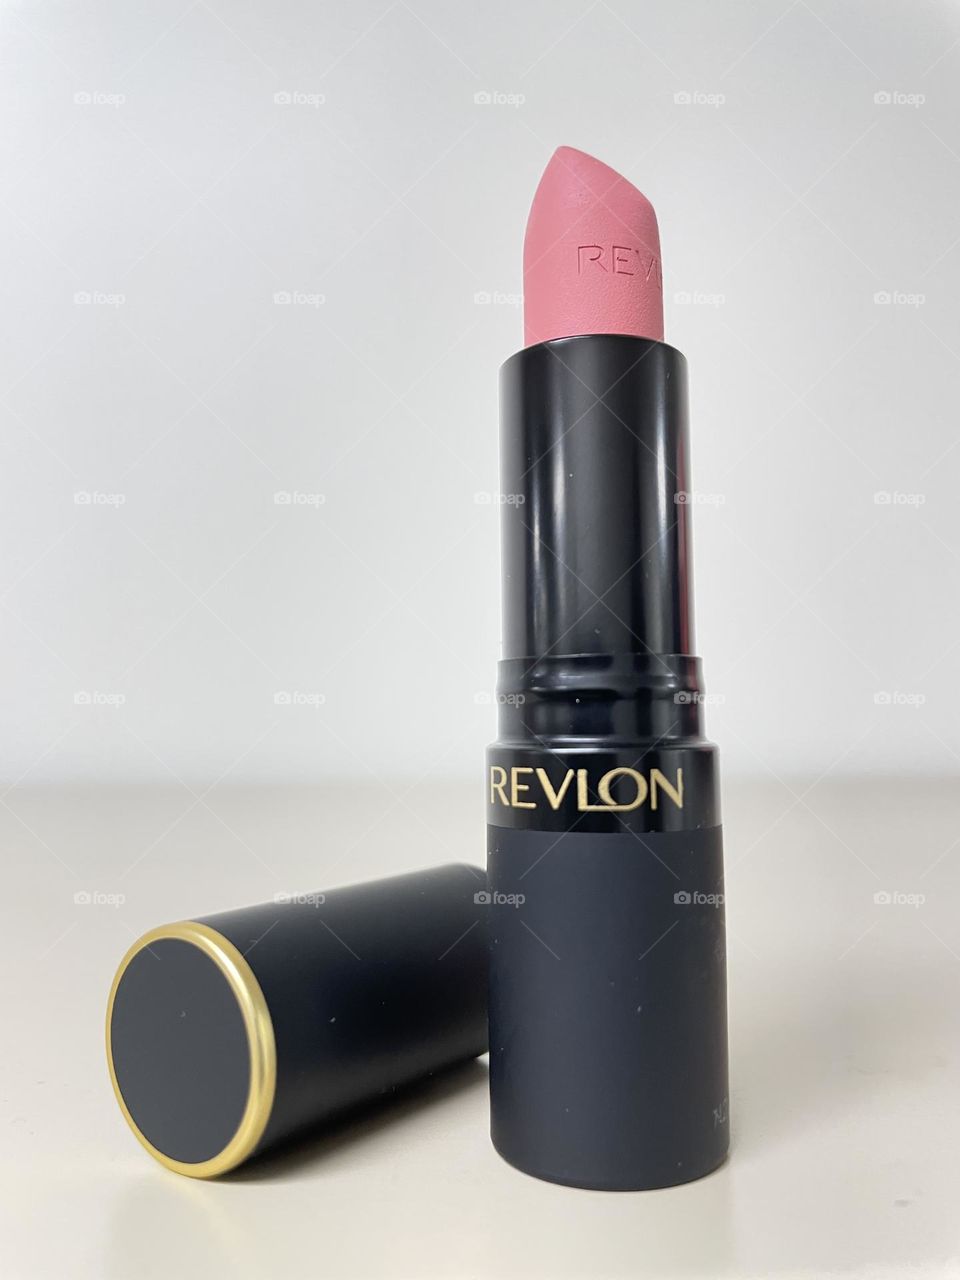 Revlon super lustrous lipstick- new matte finish in Candy Addict @hoosiermamapics 